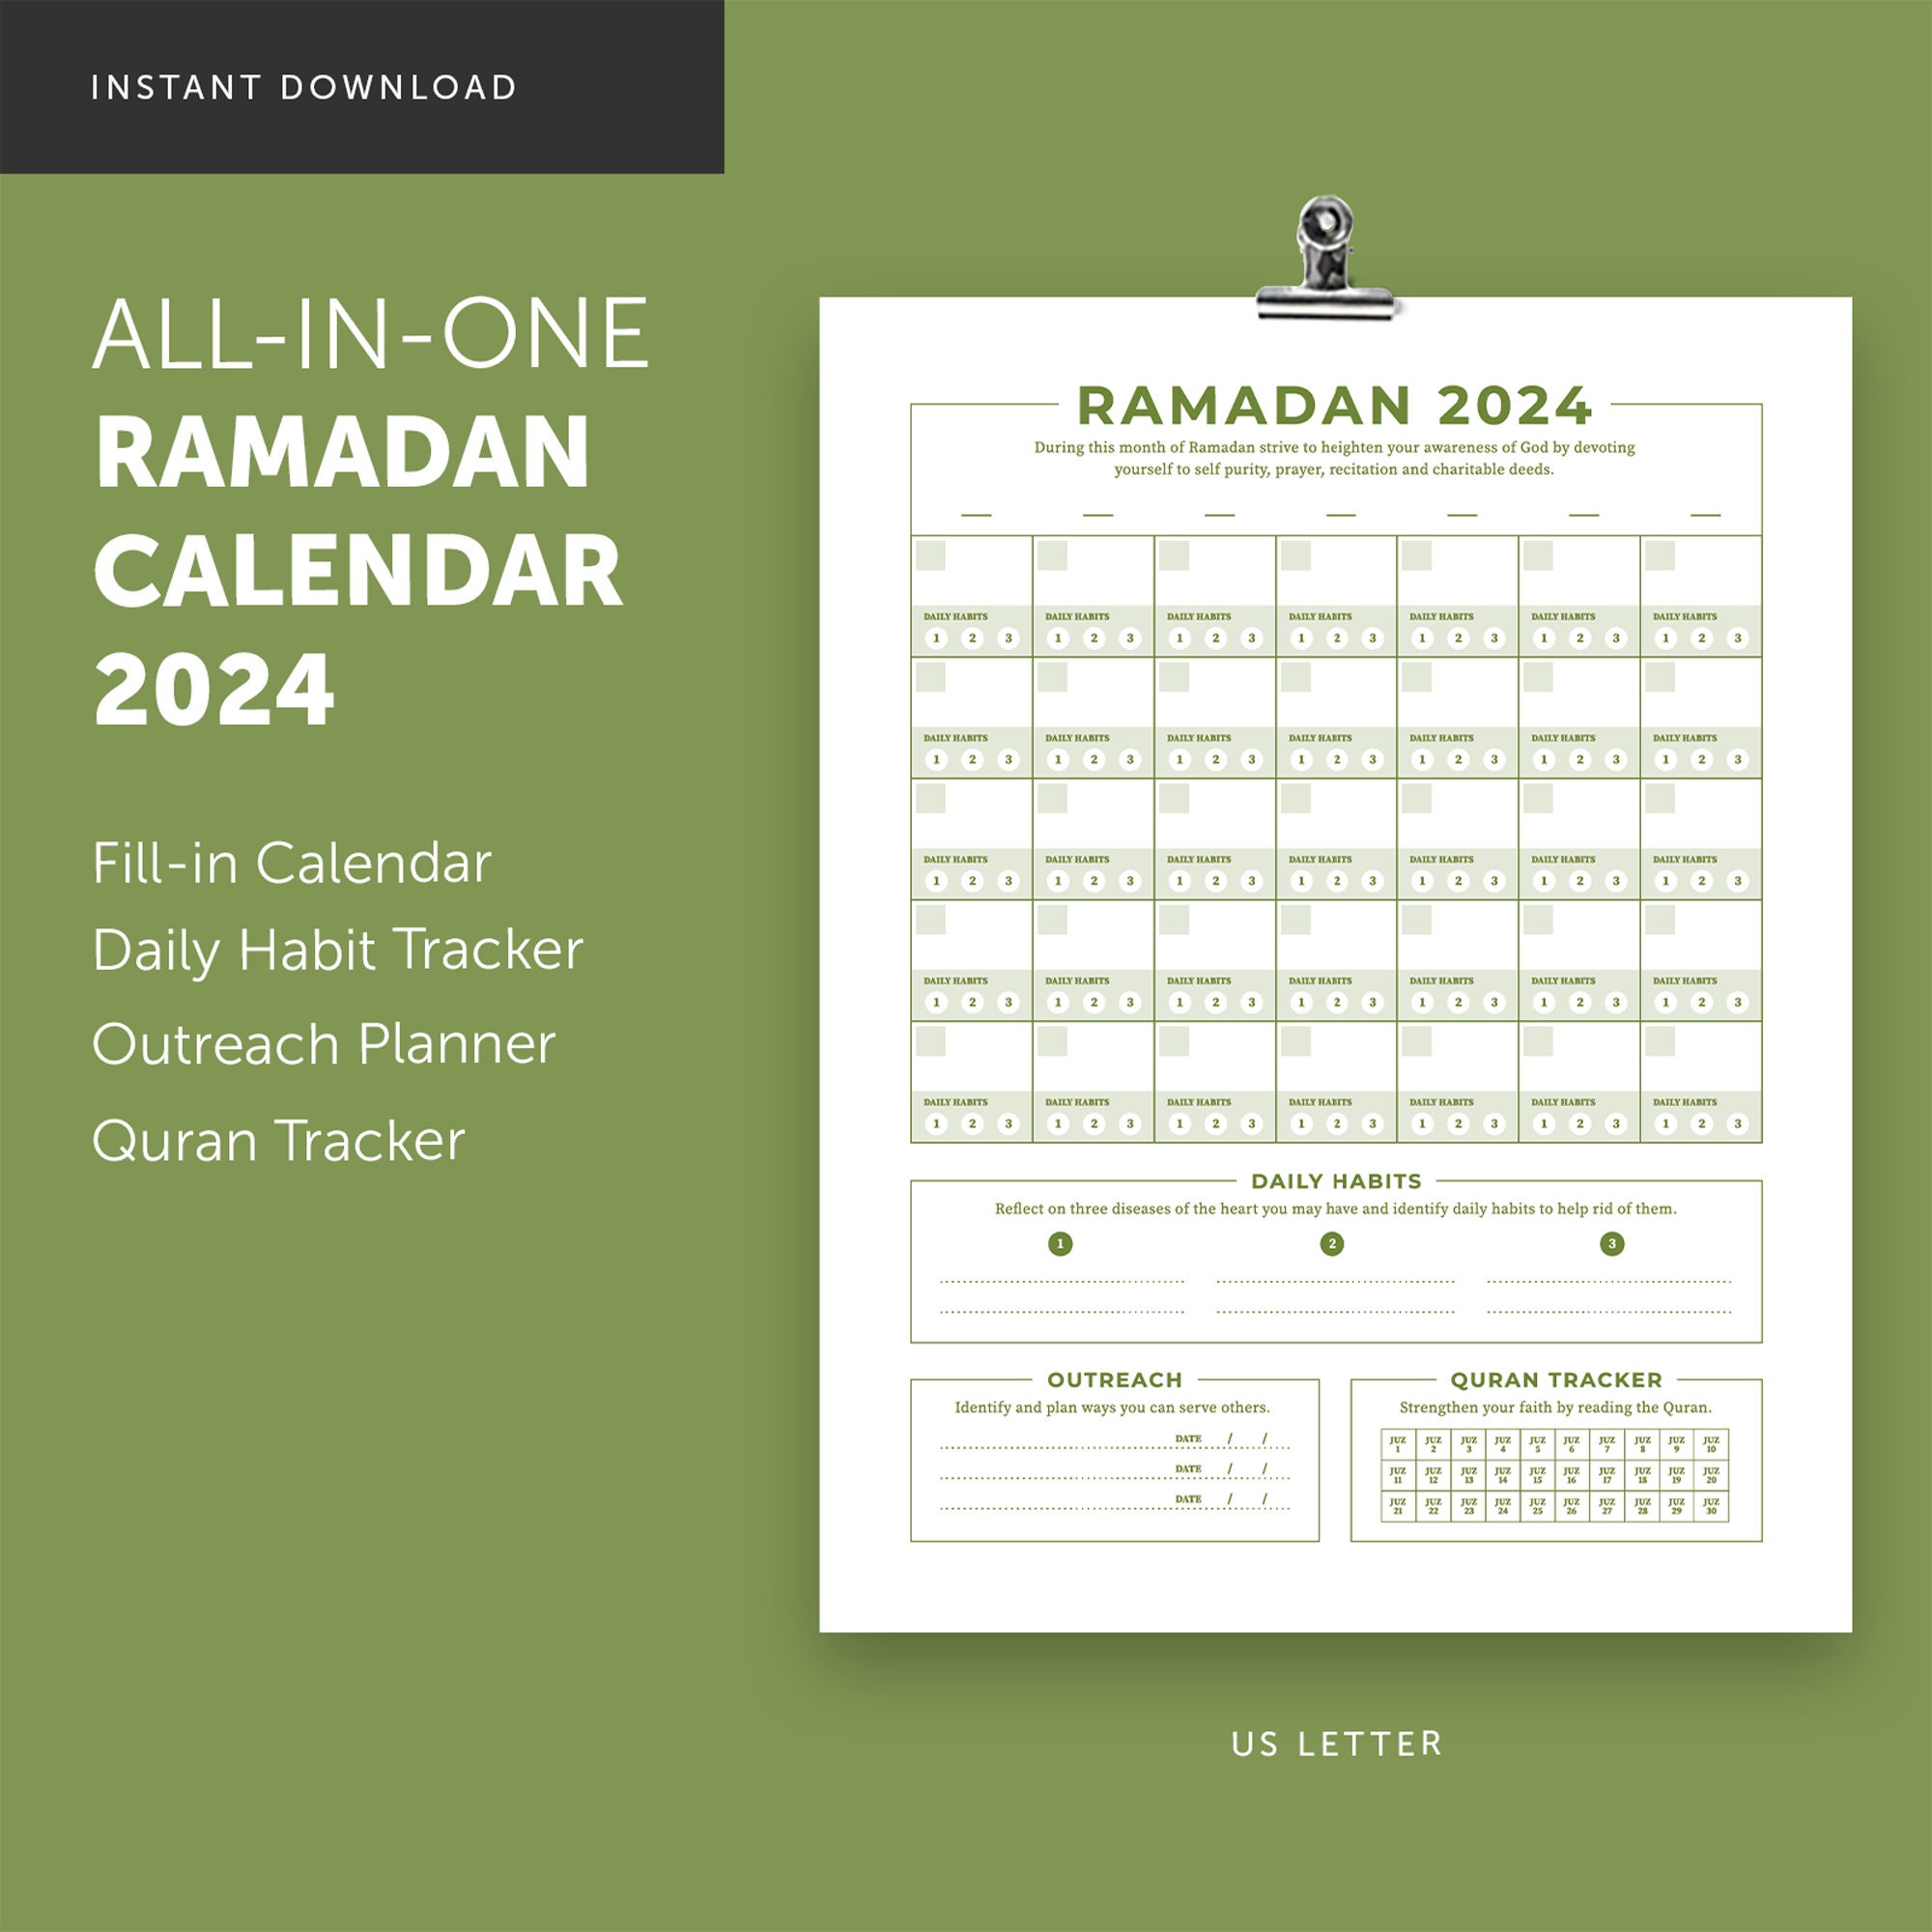 All-in-one Ramadan 2024 Calendar/planner -  New Zealand